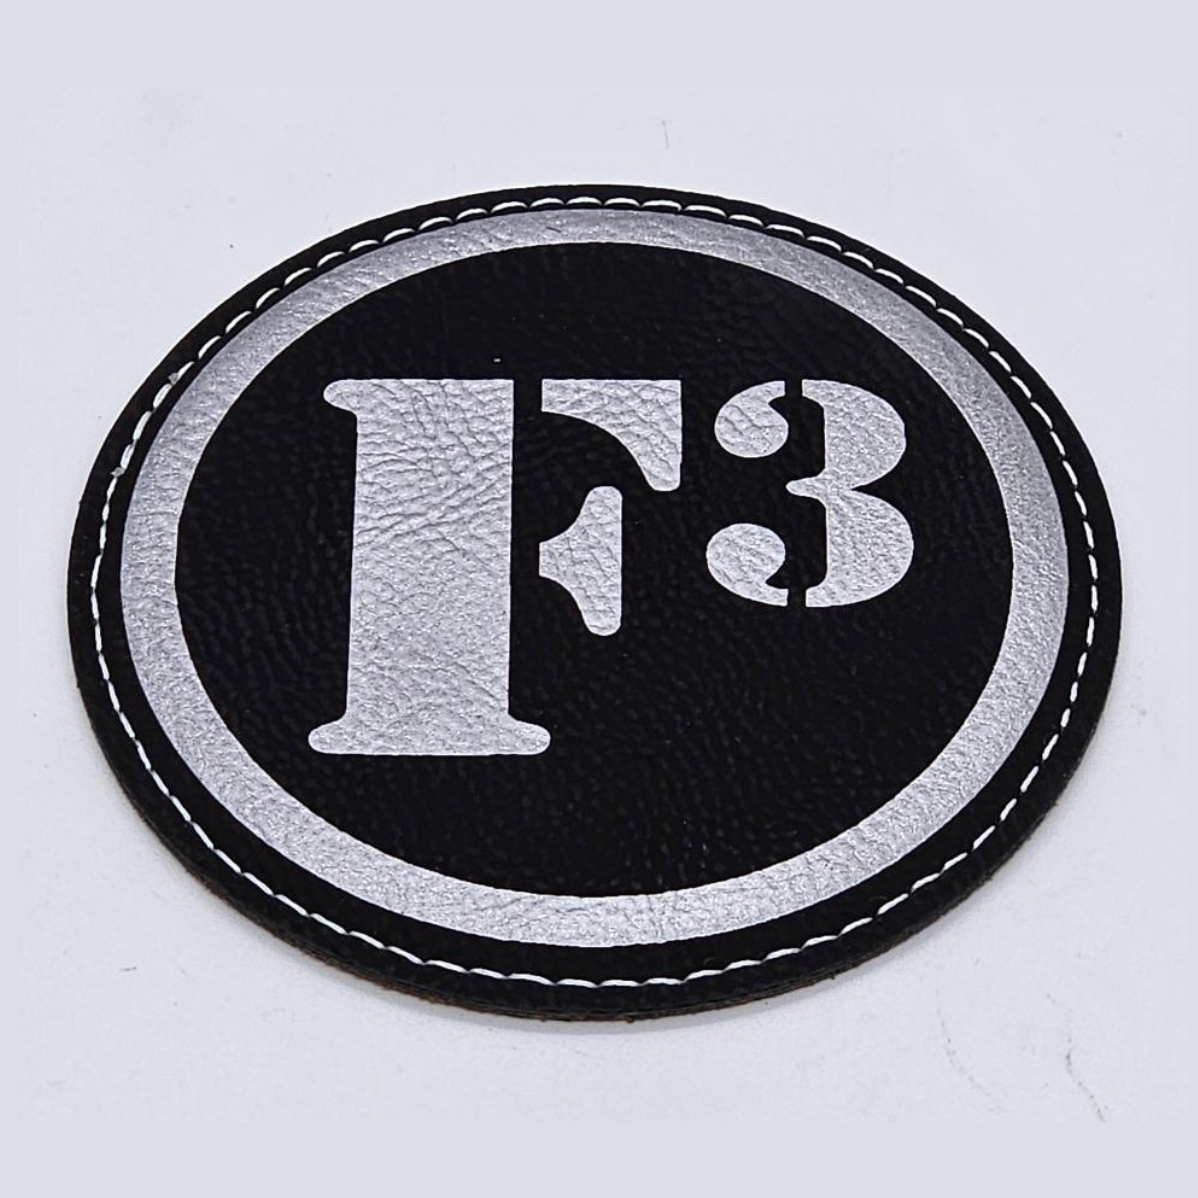 F3 Leatherette Coaster 4-Pack